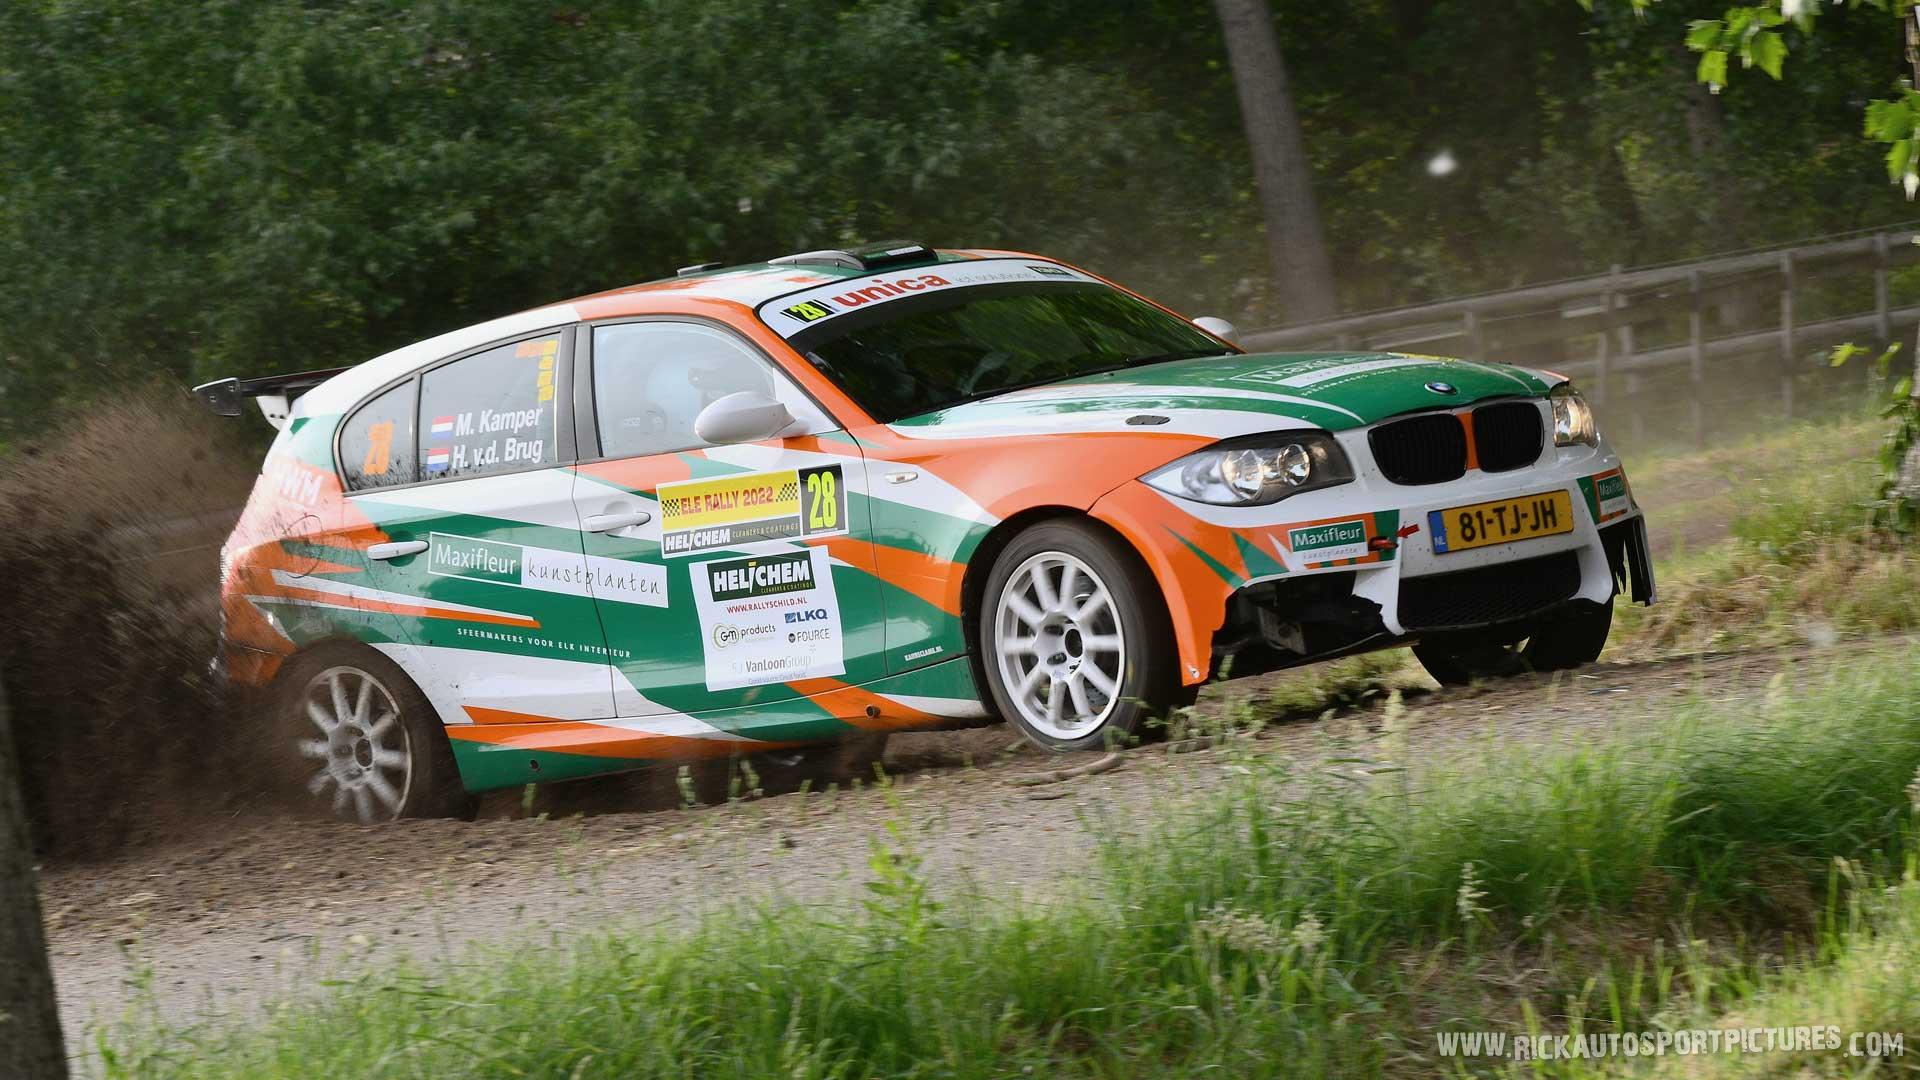 Michael Kamper & Henk v.d. Burg ele rally 2022